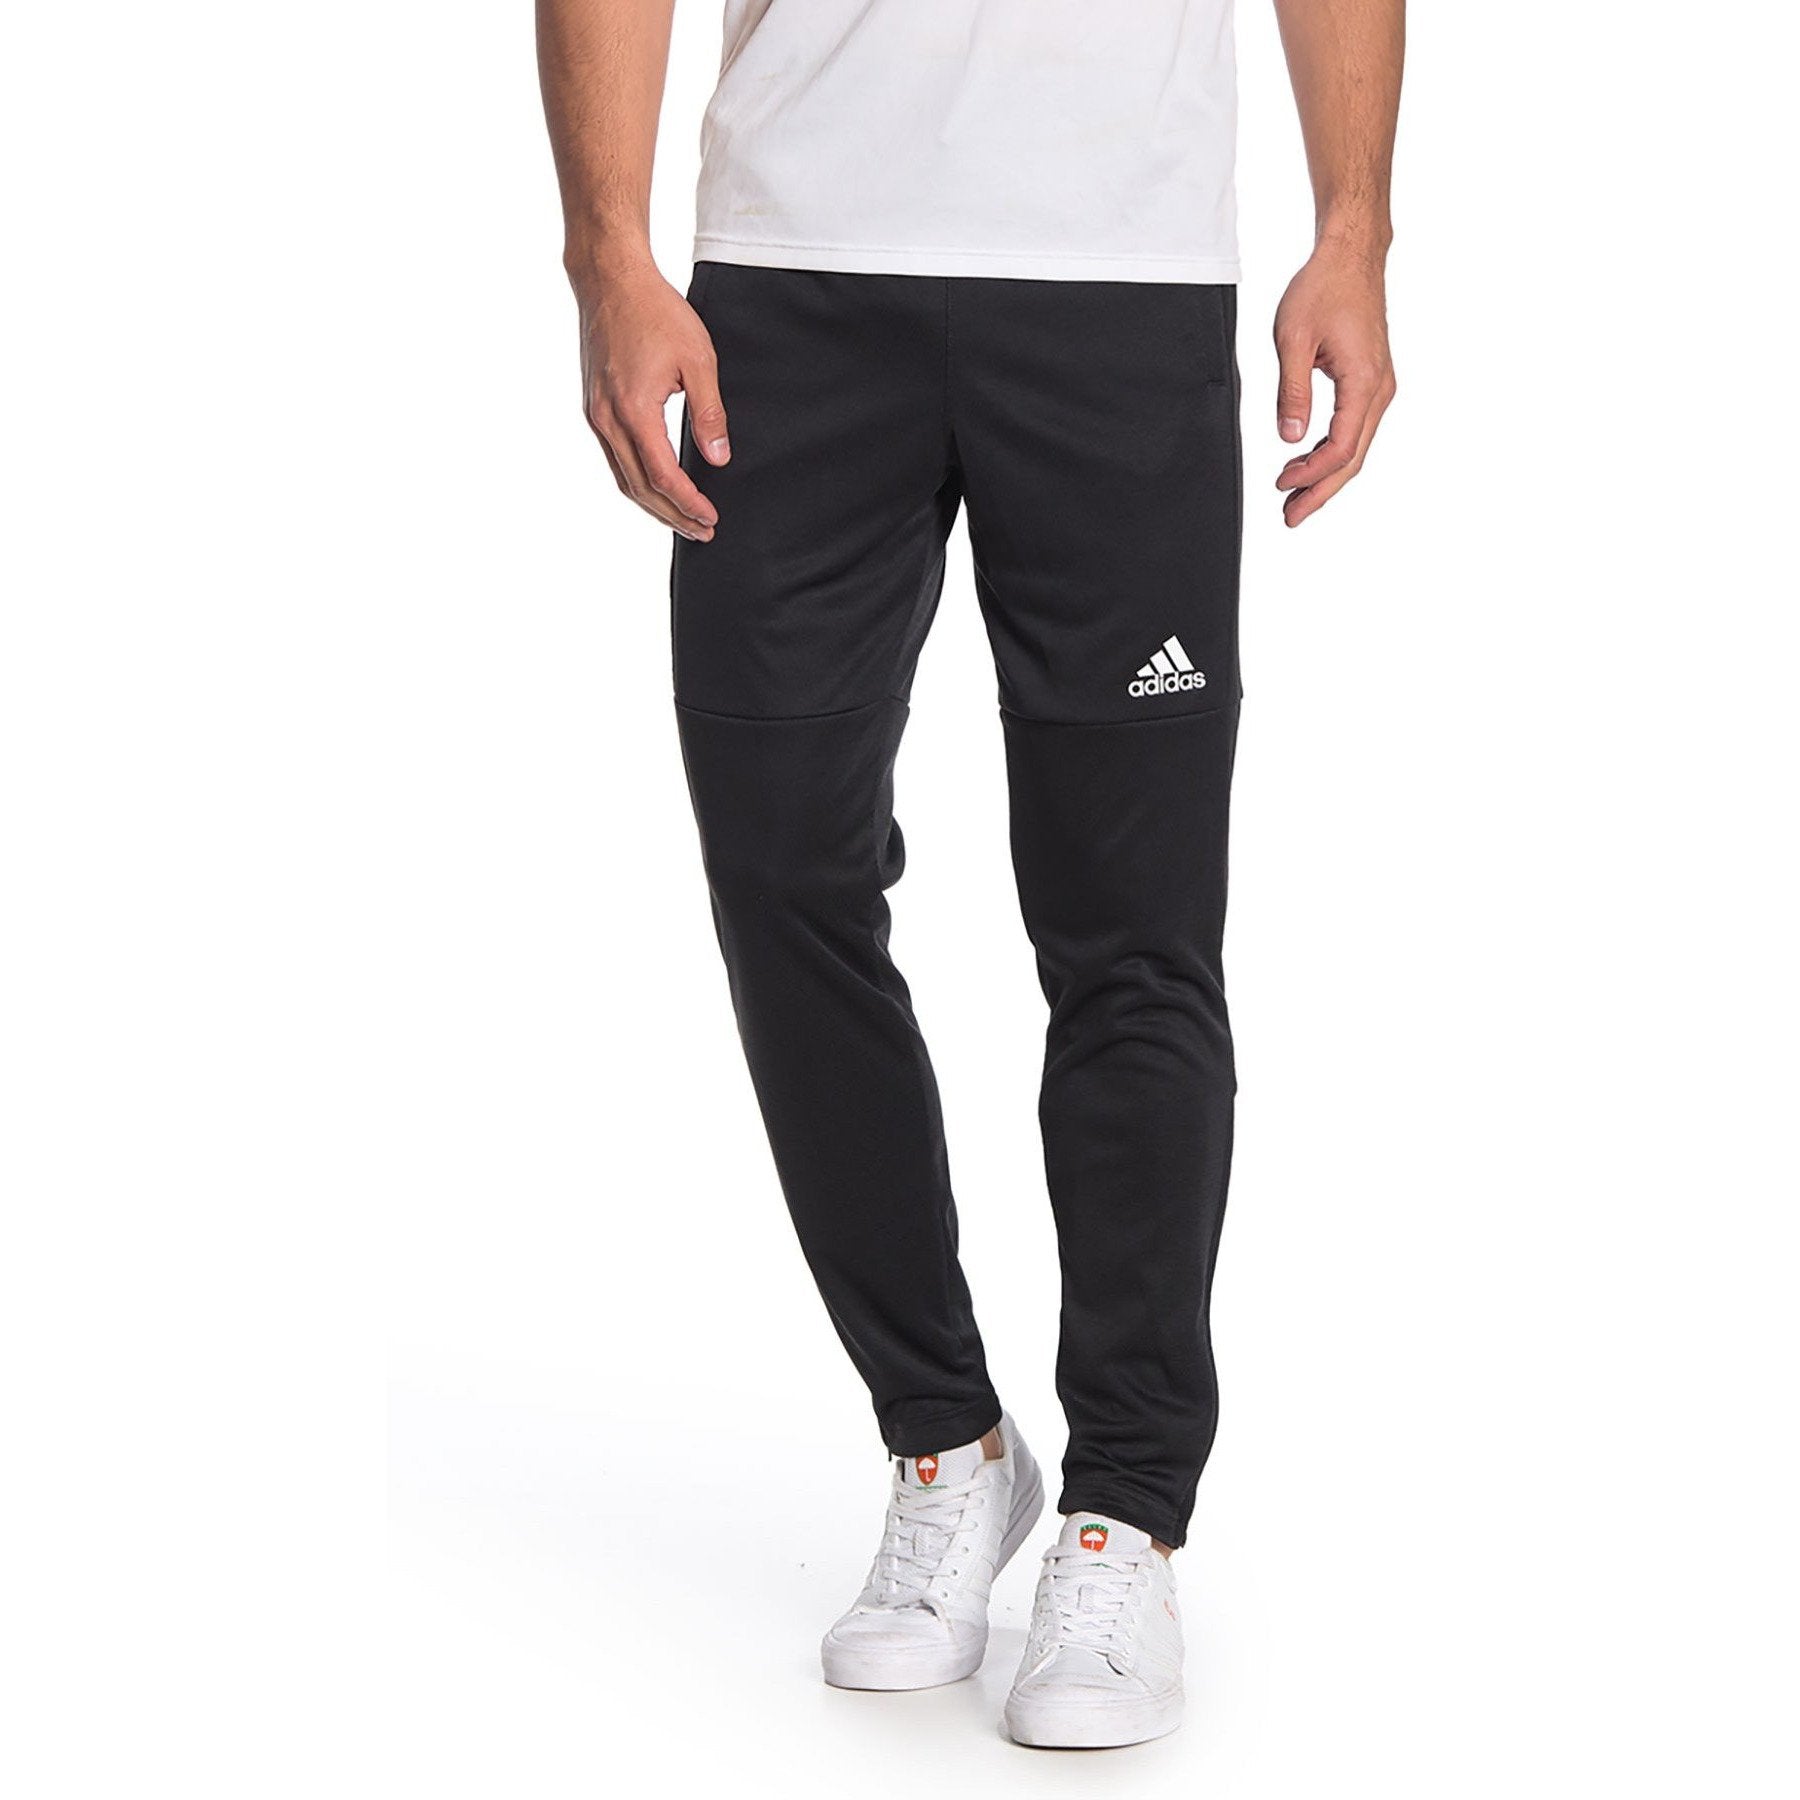 [DU2552] Mens Adidas Team Issue TI Lite Pant